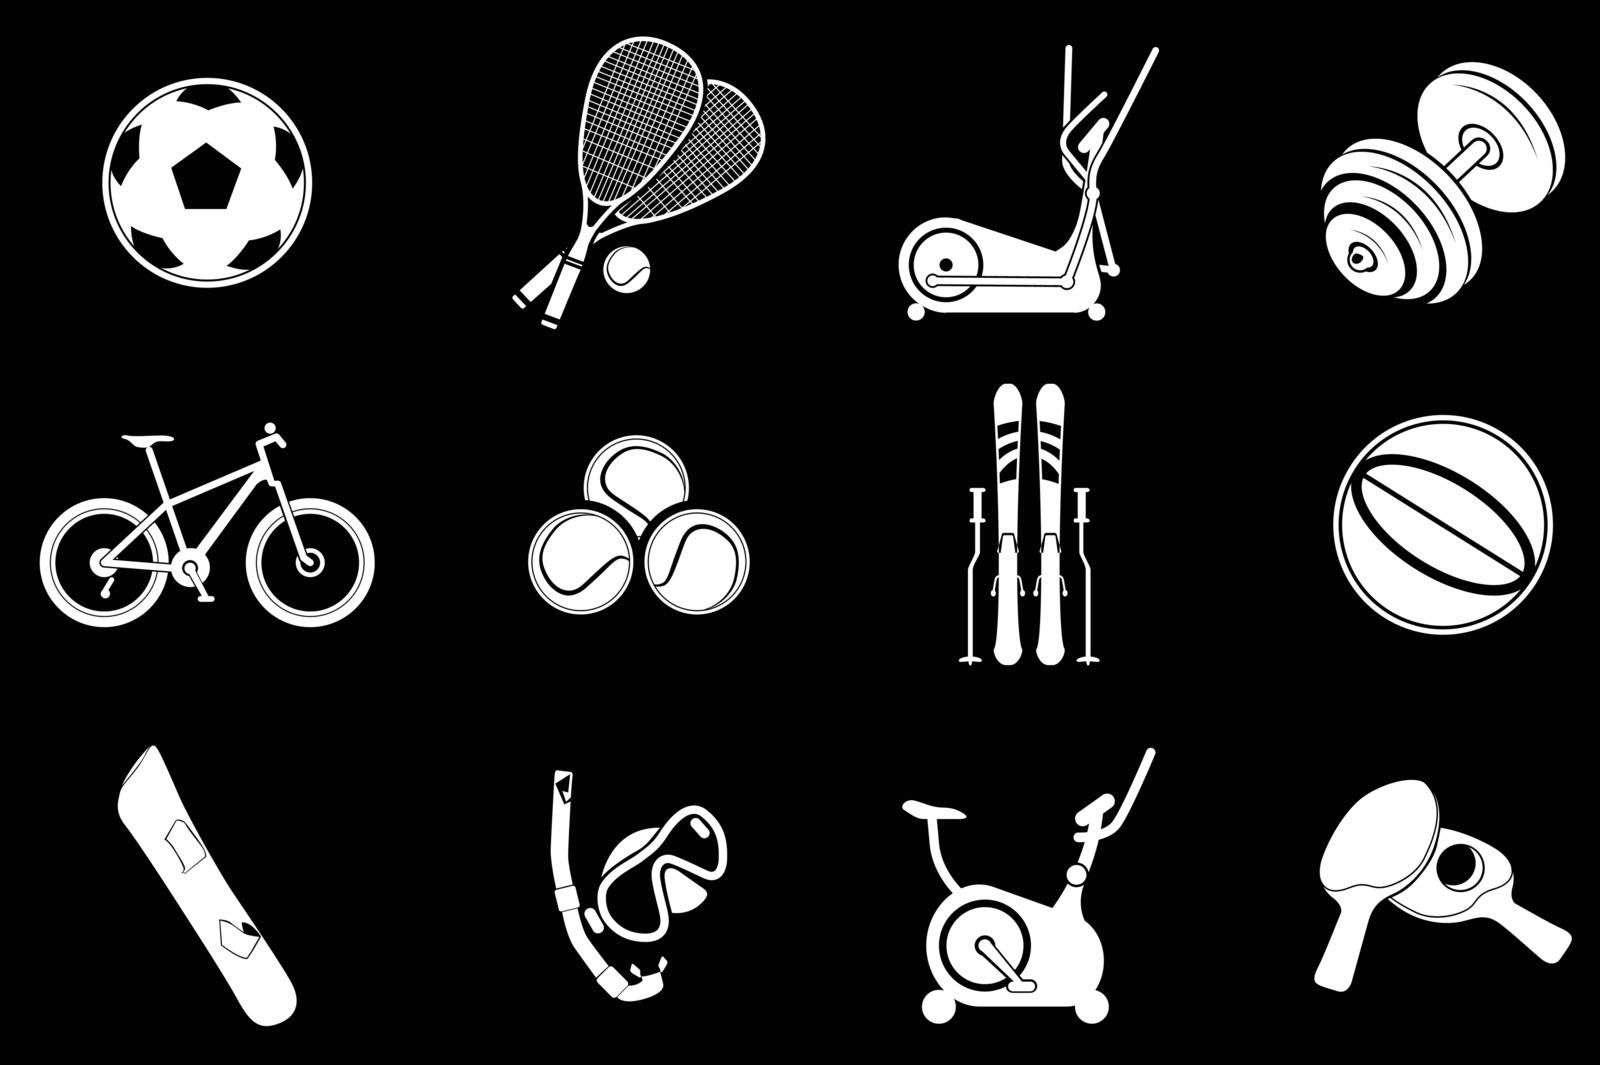 Sport equipment symbols by ayax